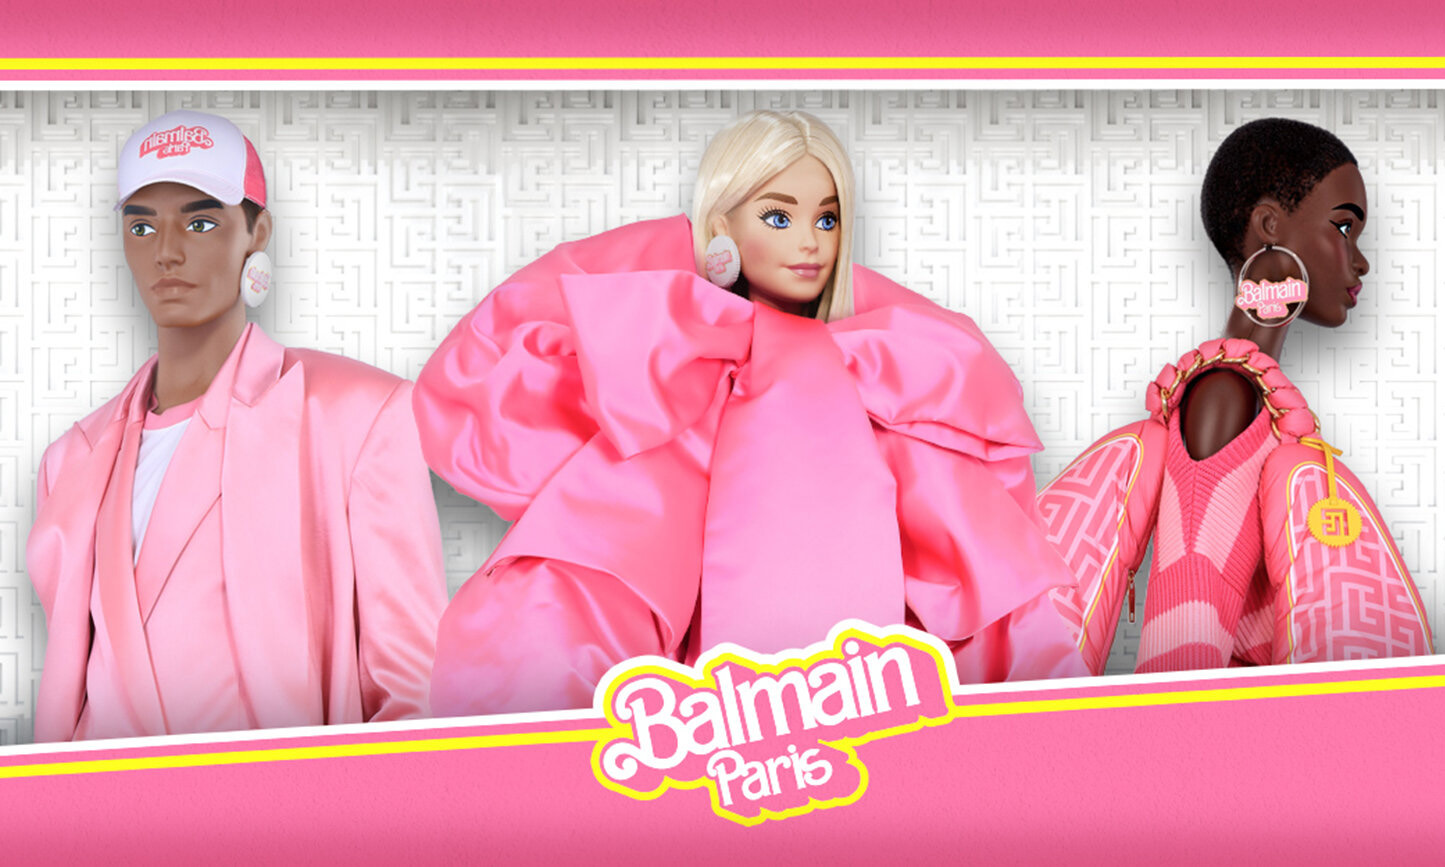 Balmain x Barbie 联名系列即将发售